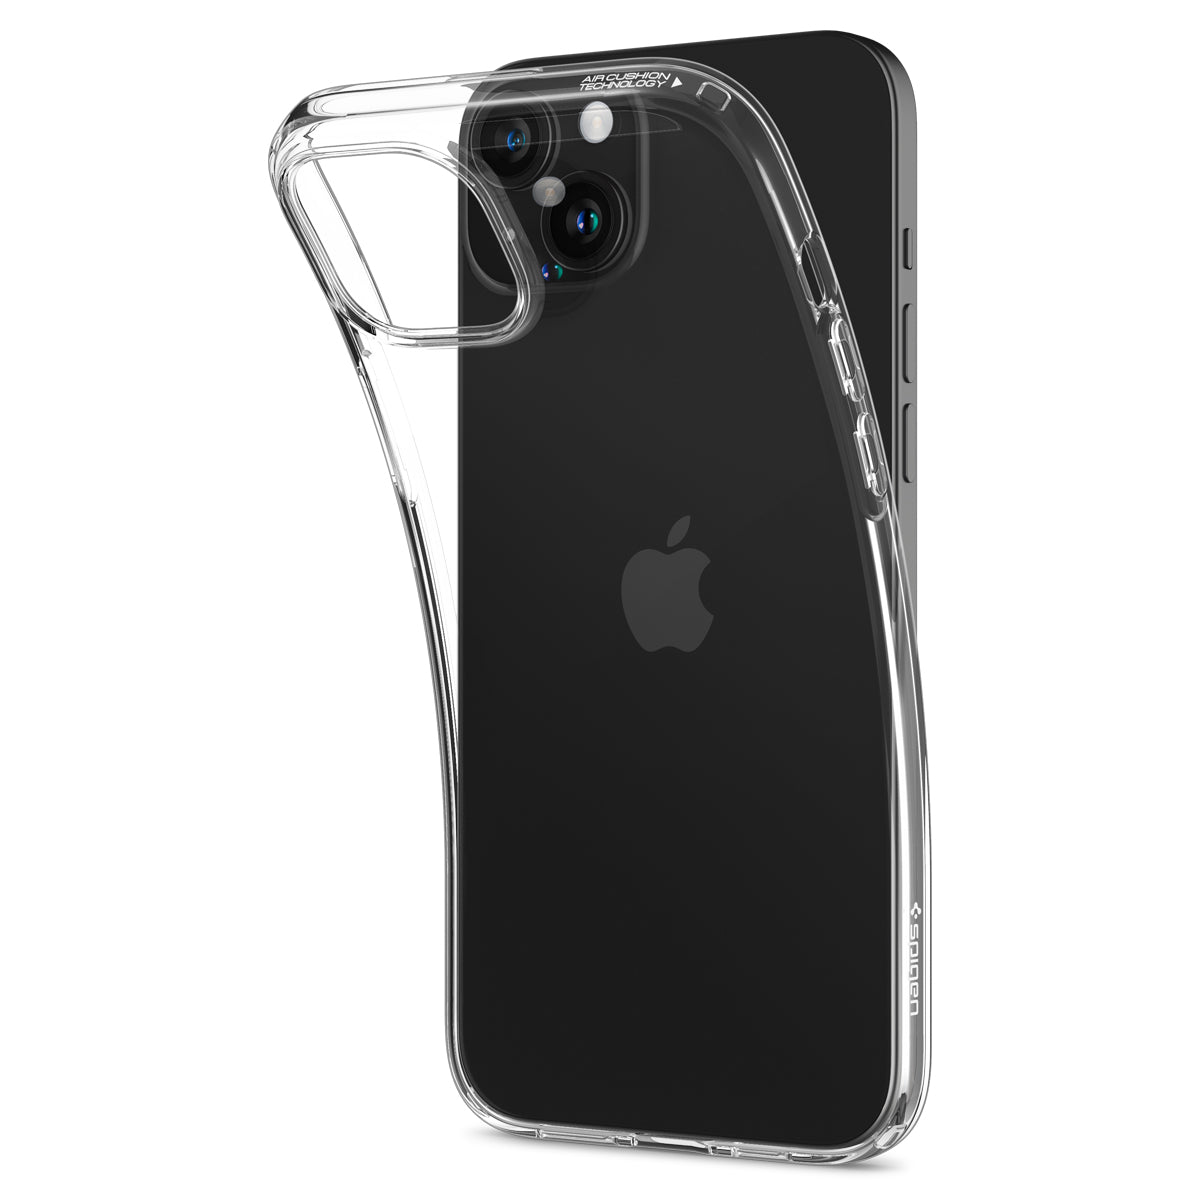 Funda Liquid Crystal iPhone 15 Clear